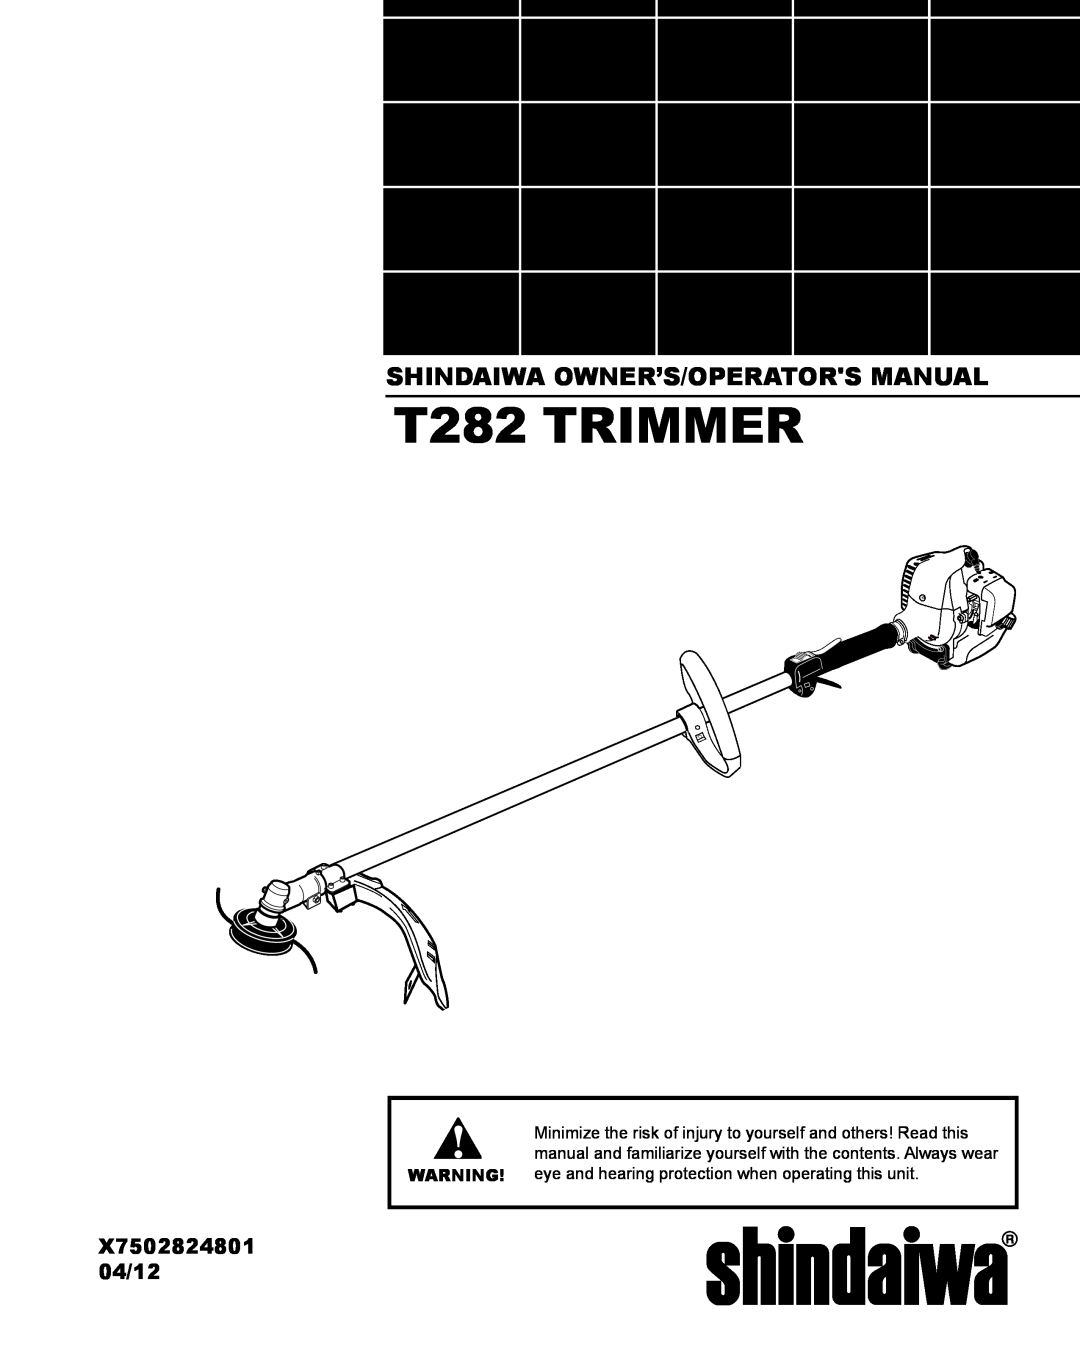 Shindaiwa manual Shindaiwa Owner’S/Operators Manual, X7502824801 04/12, T282 TRIMMER 